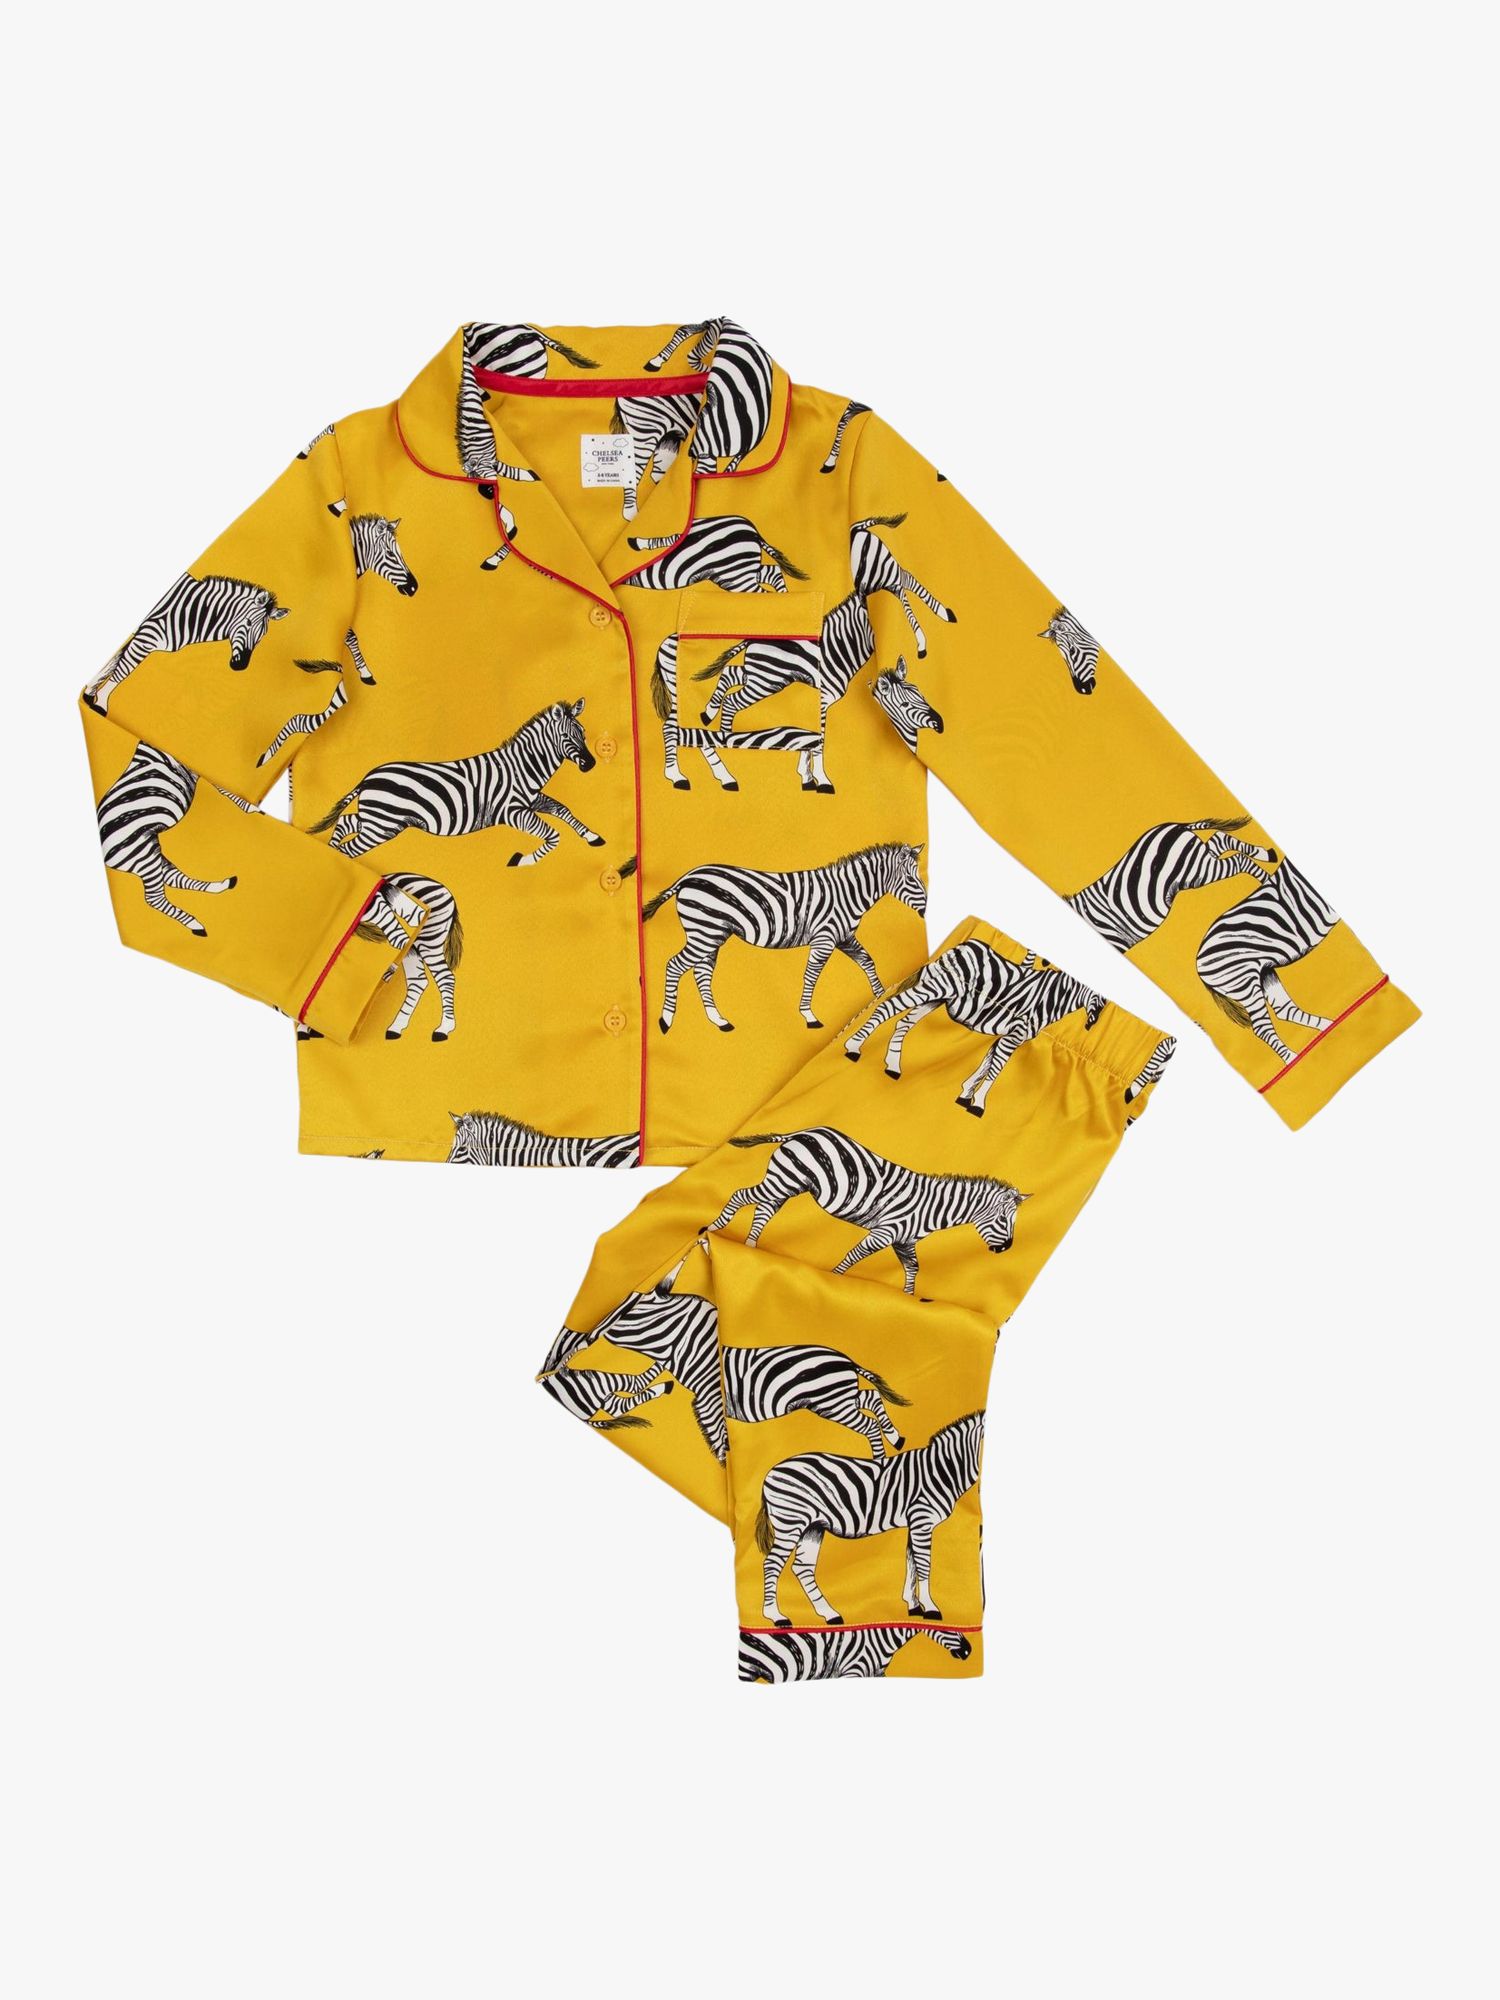 Chelsea Peers Kids' Satin Zebra Pyjama Set, Mustard at John Lewis & Partners